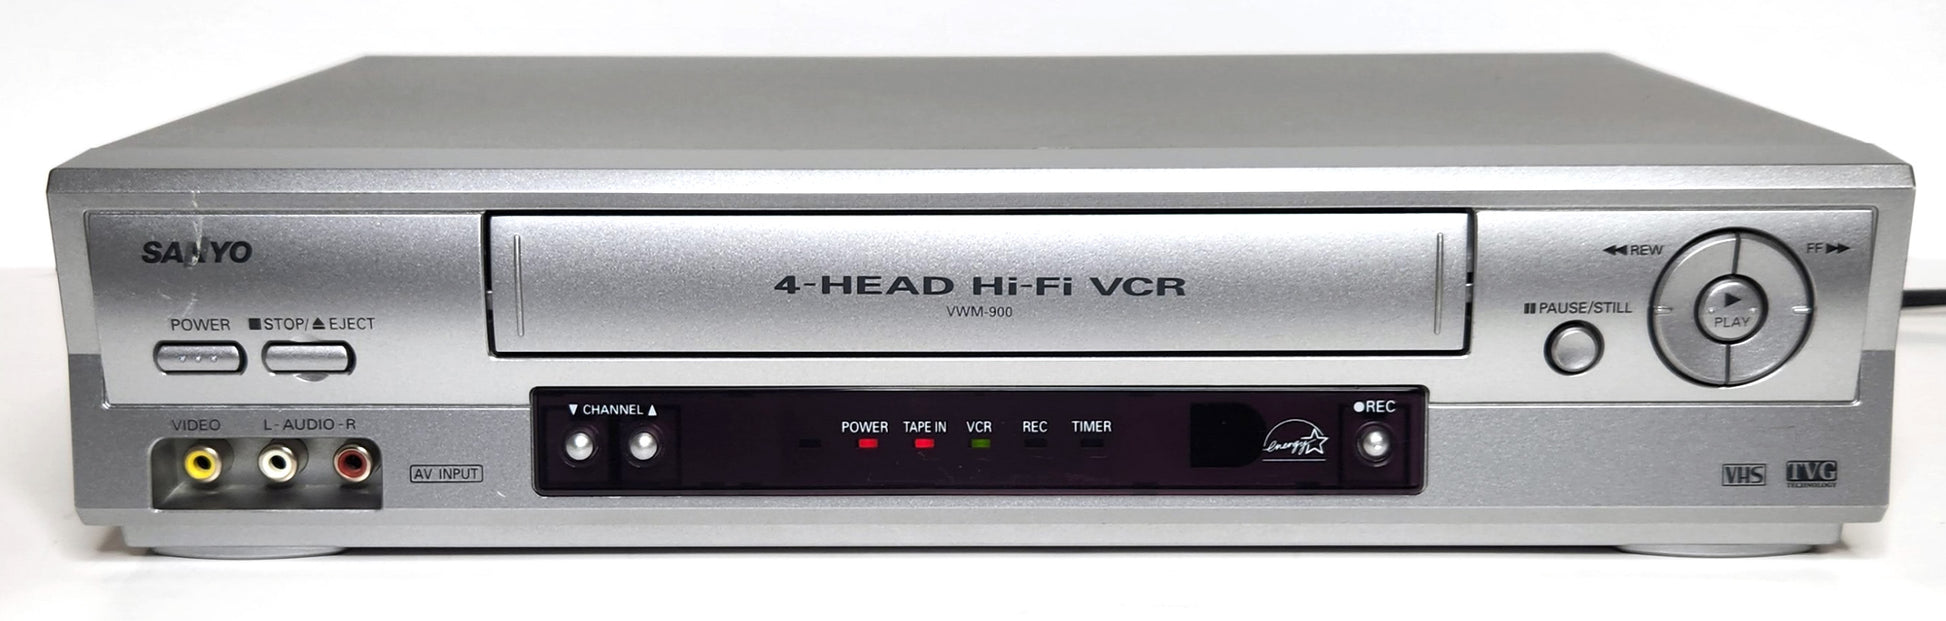 Sanyo VWM-900 VCR, 4-Head Hi-Fi Stereo - Front